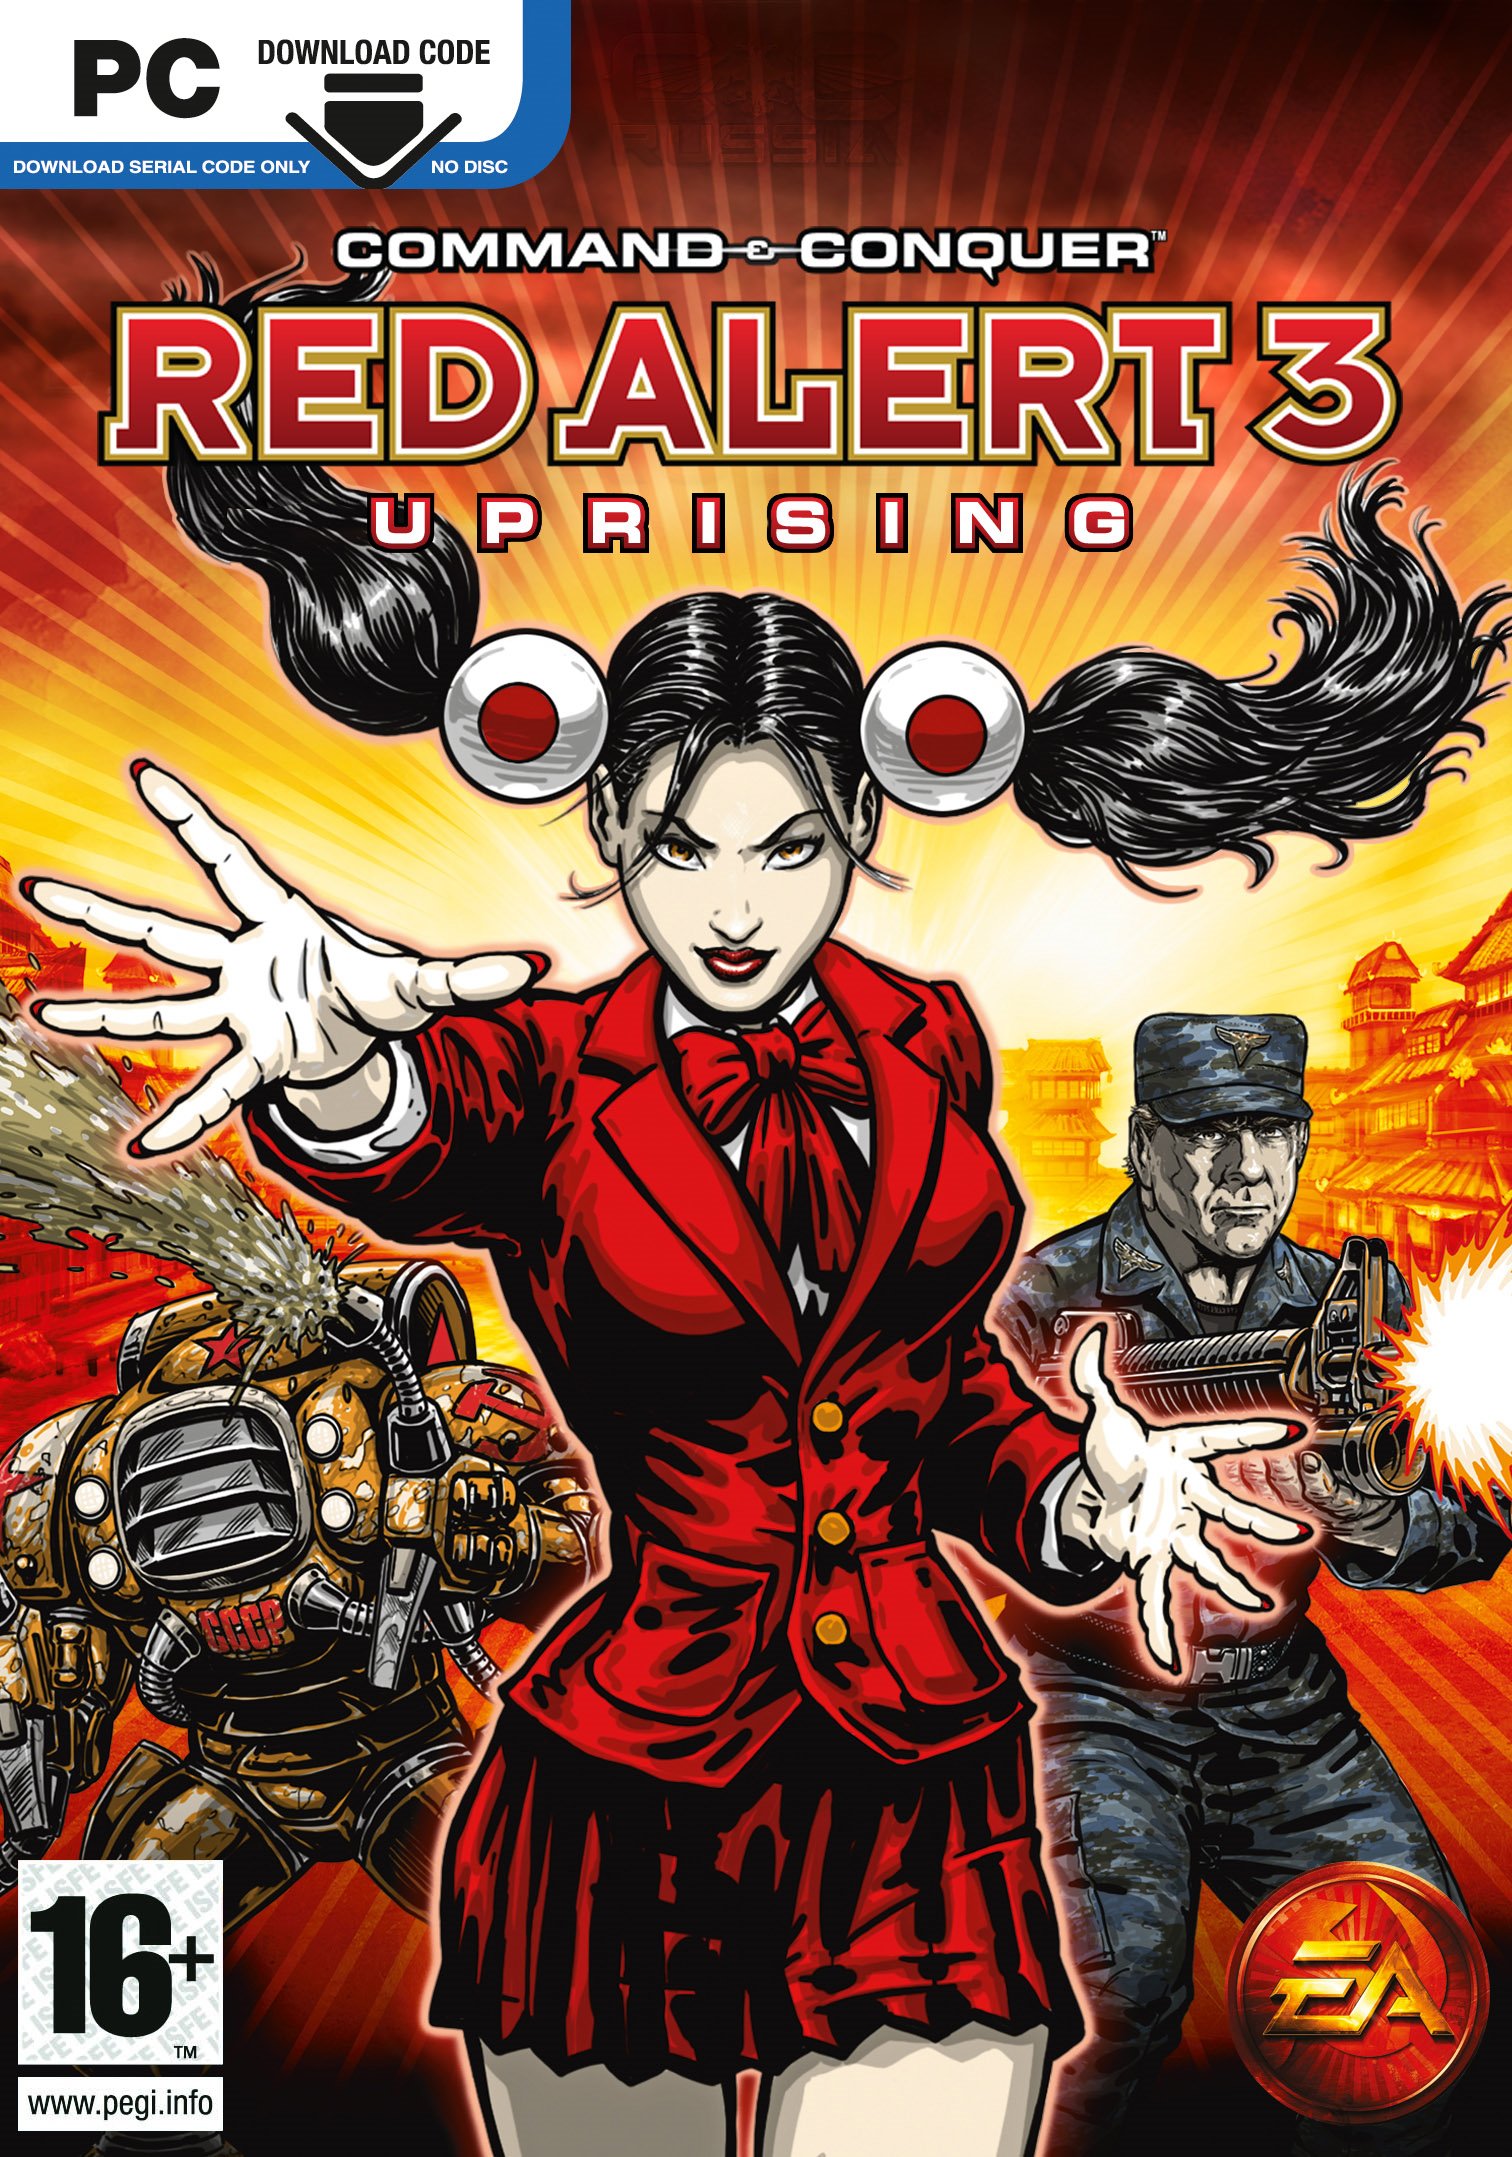 red alert 2 free download full game exe